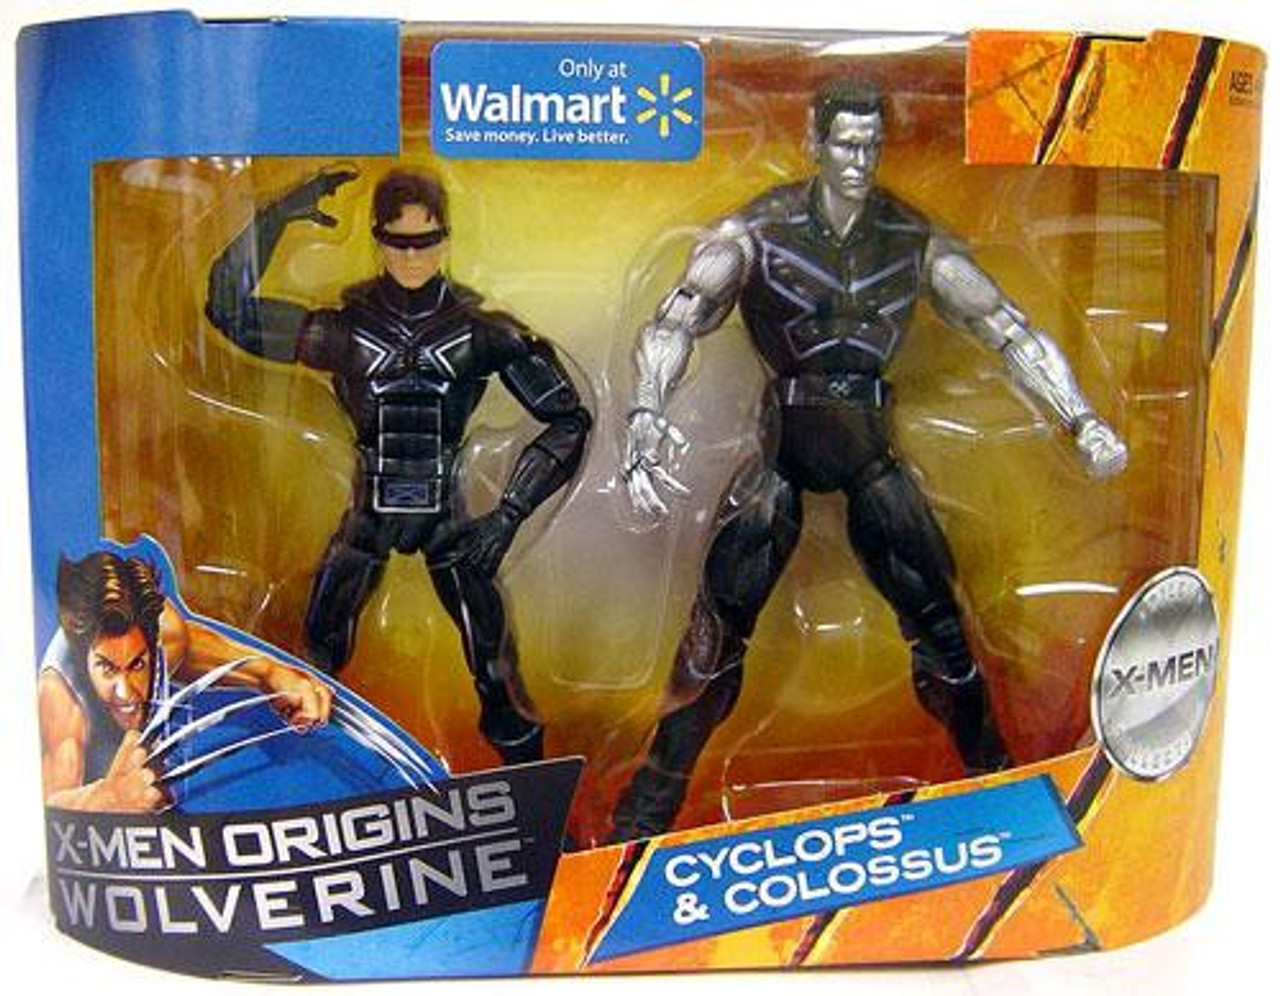 X Men Origins Wolverine Cyclops Colossus Exclusive Action Figure 2 Pack Hasbro Toys Toywiz - cyclops 3 roblox